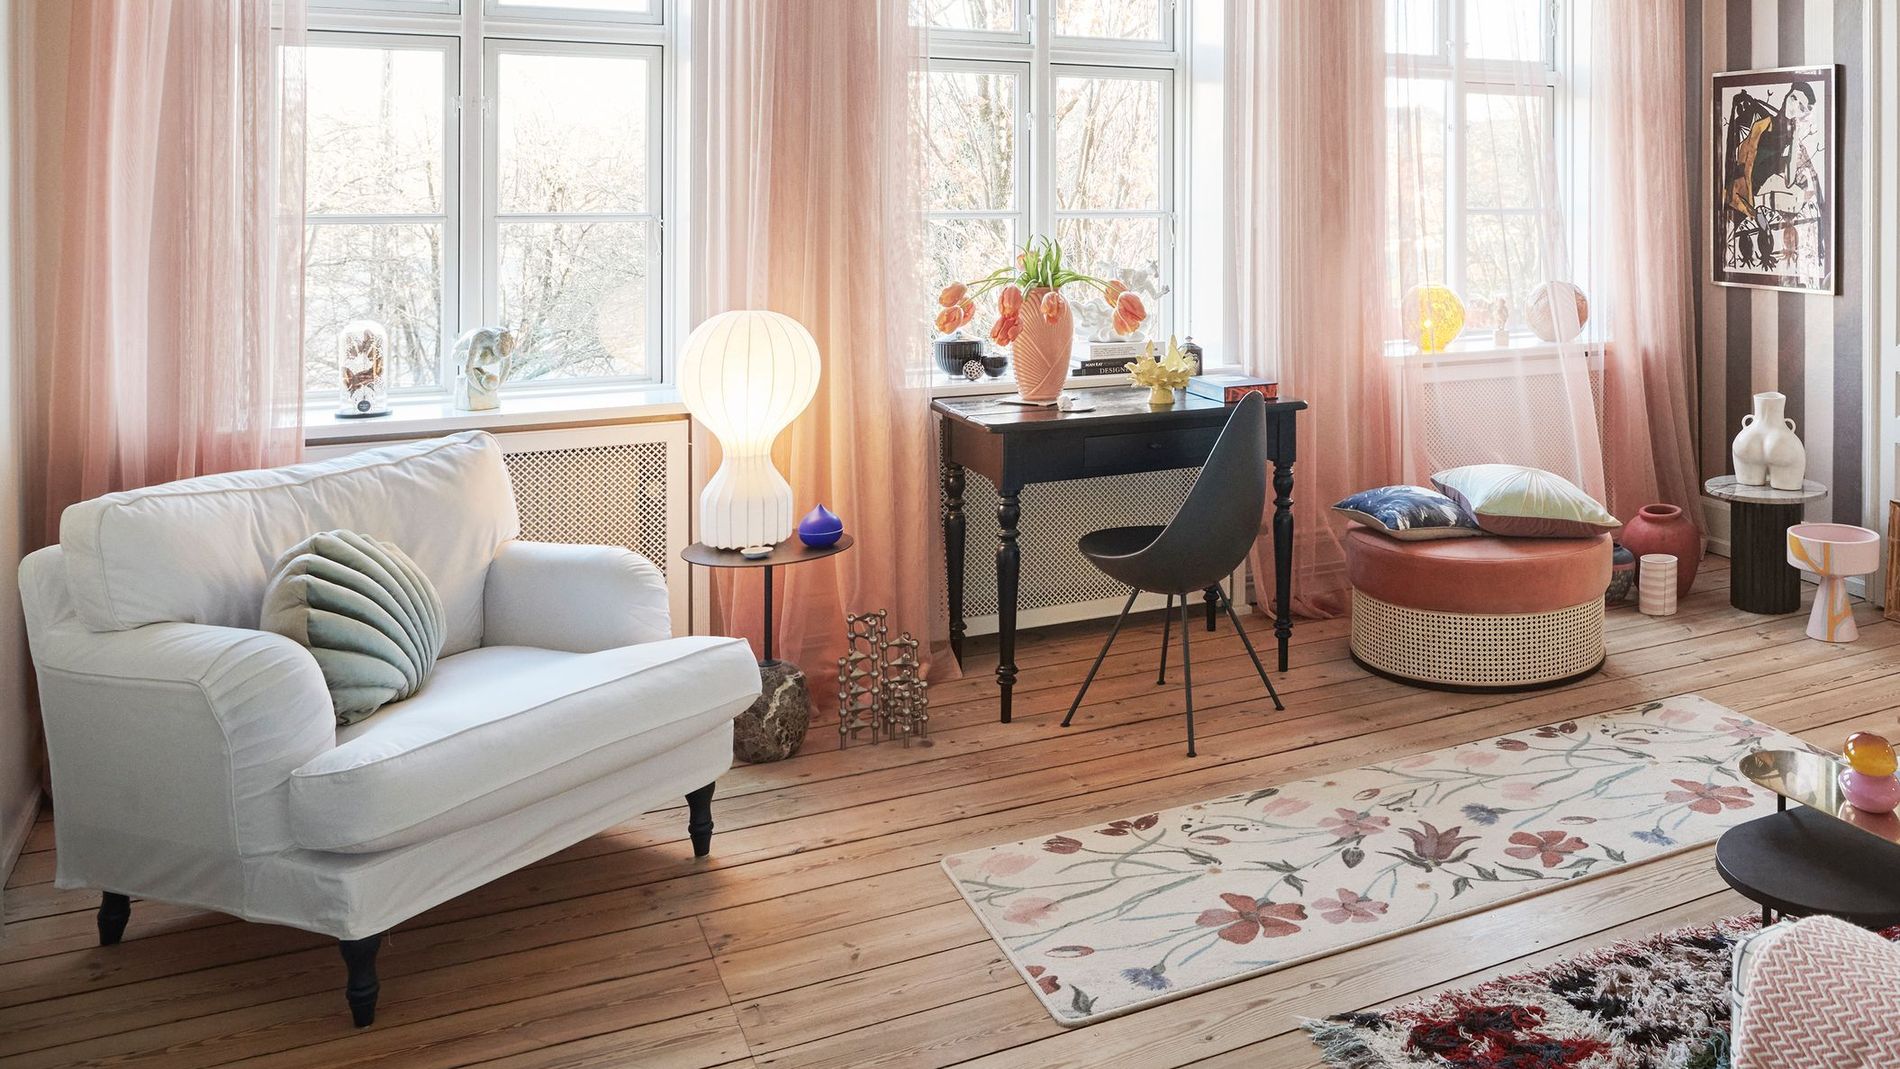 lamp scandinavian design classic danish Swedish interiors